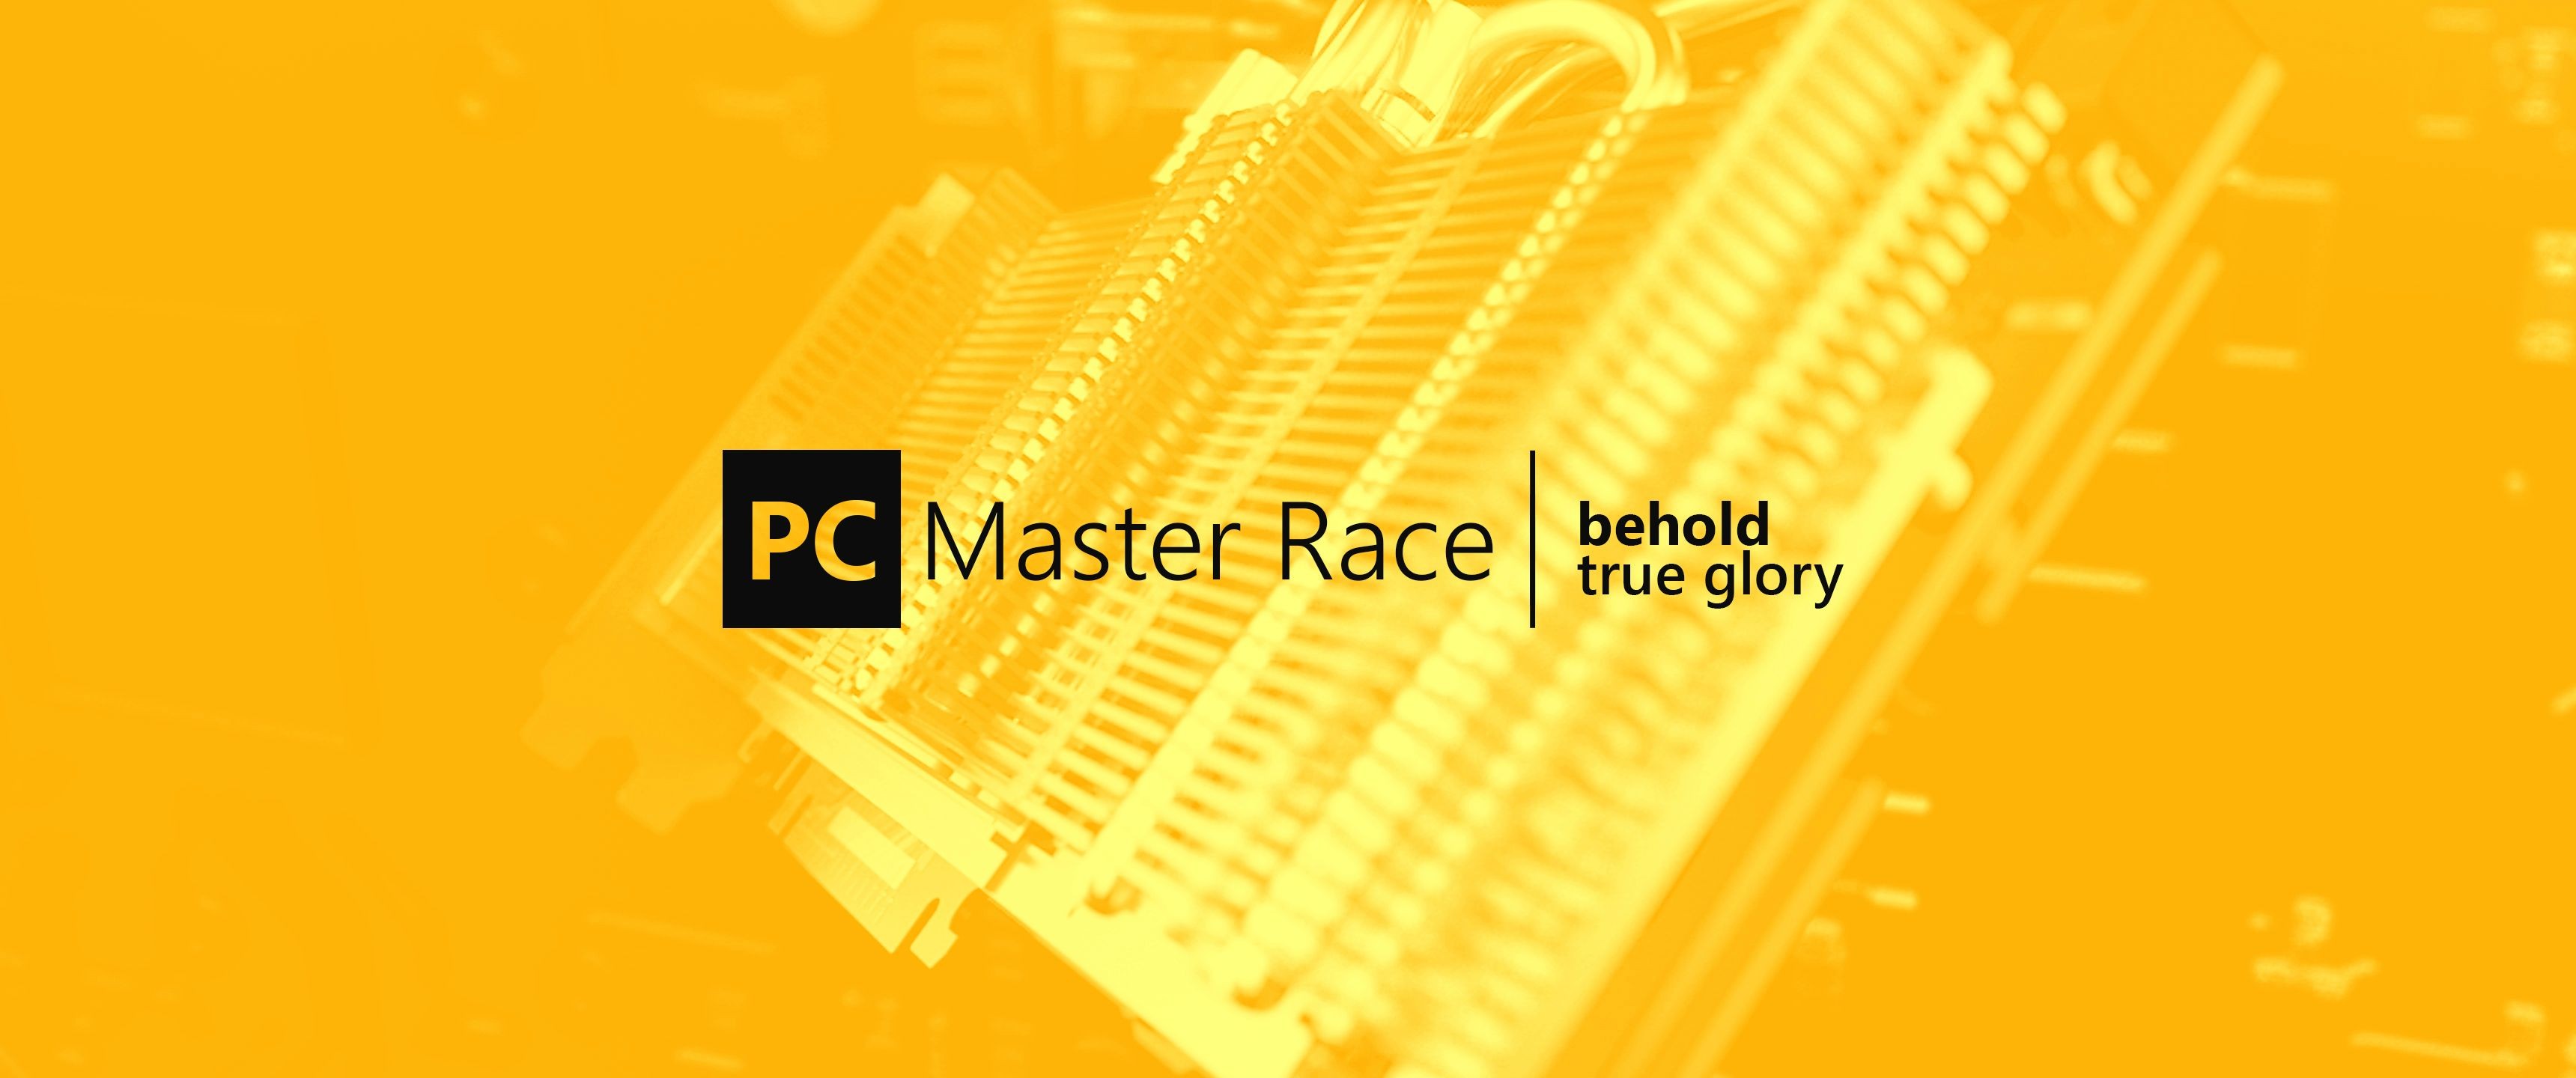 General 3440x1440 PC Master  Race PC gaming yellow background yellow digital art